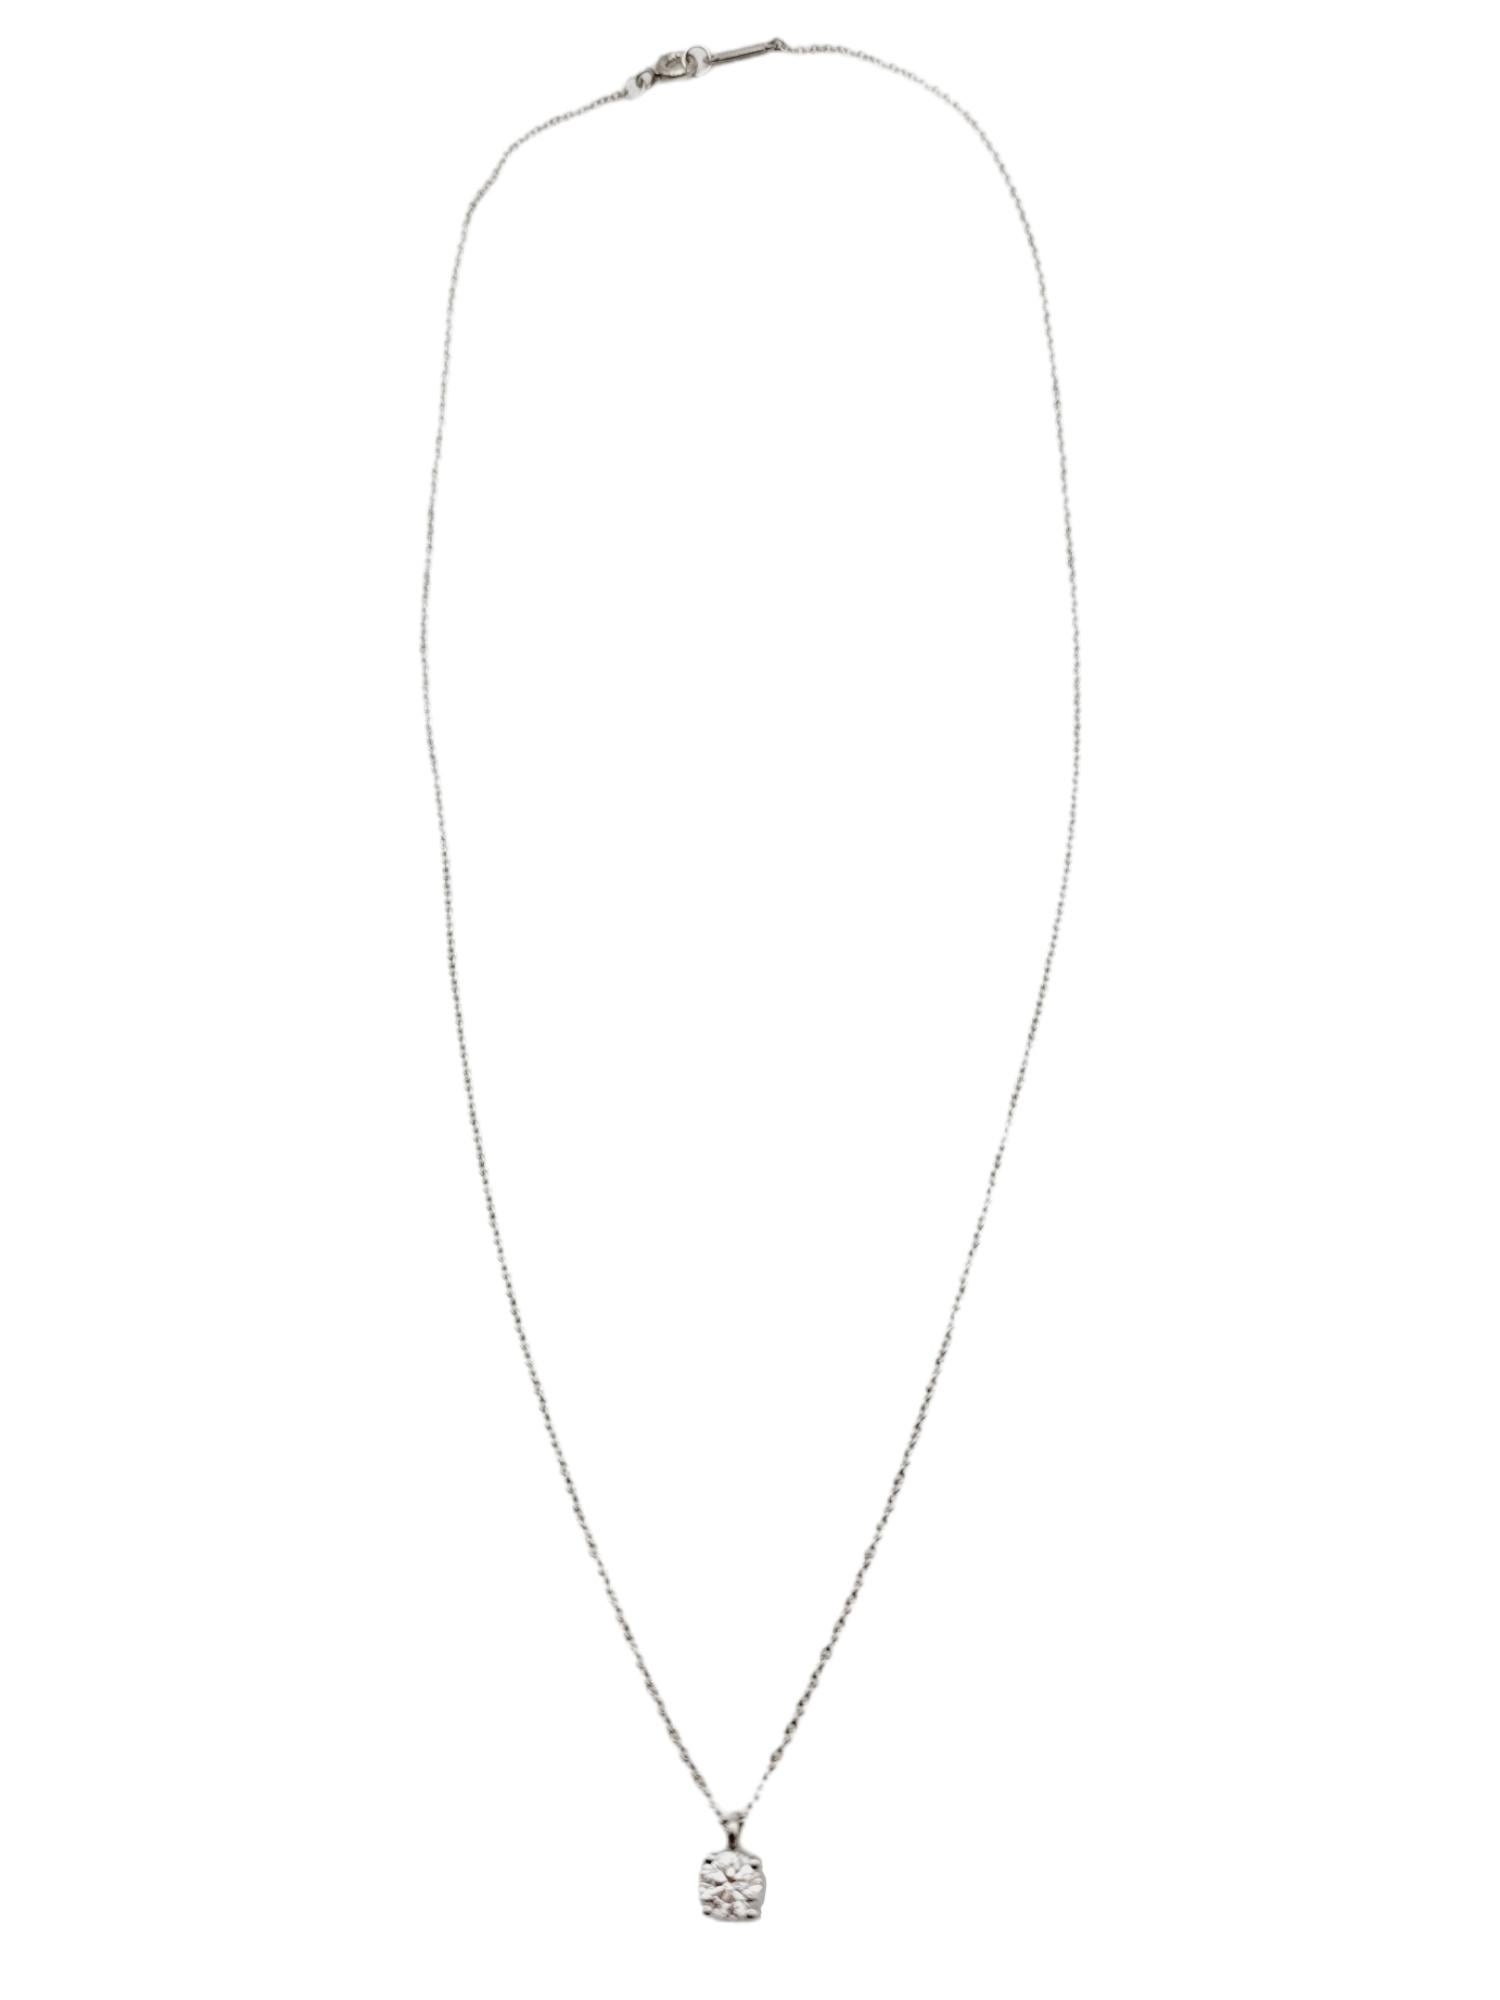 Tiffany & Co. Round Diamond Solitaire Platinum Necklace .38 Carat D / VS2 1